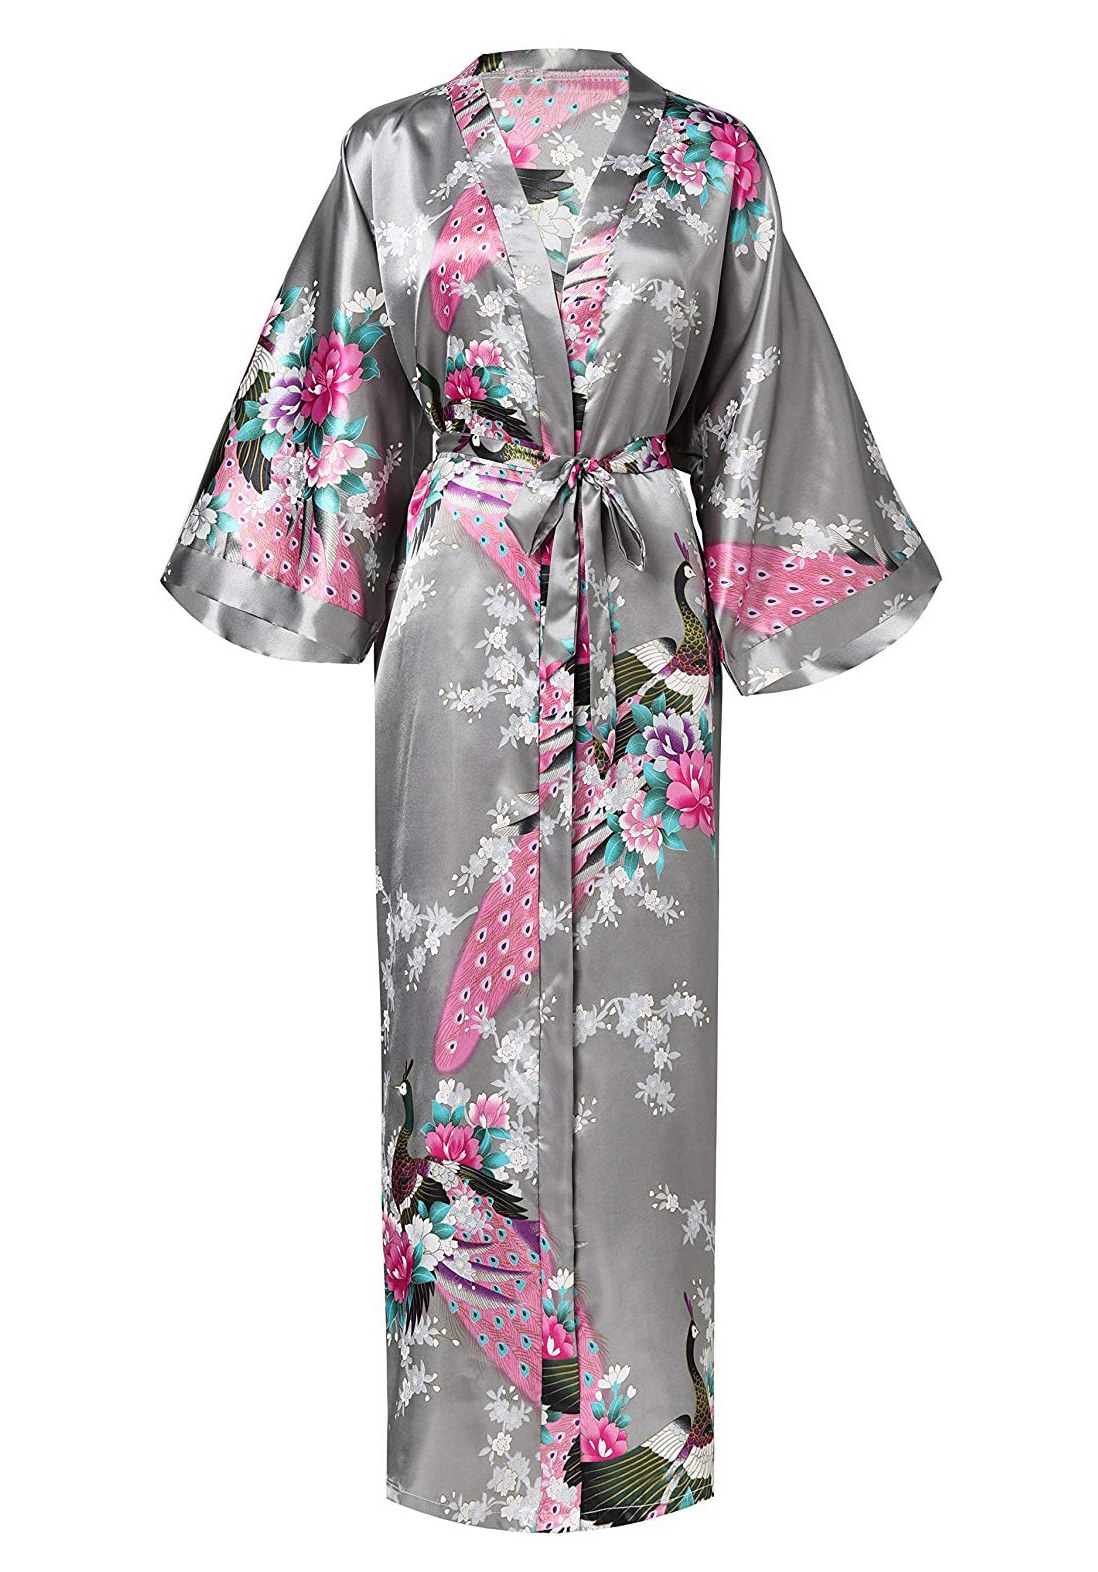 Blijkbaar Archeoloog bon Grijze kimono satijn Japanse satijnen badjas kamerjas geisha ochtendjas  yukata kopen?